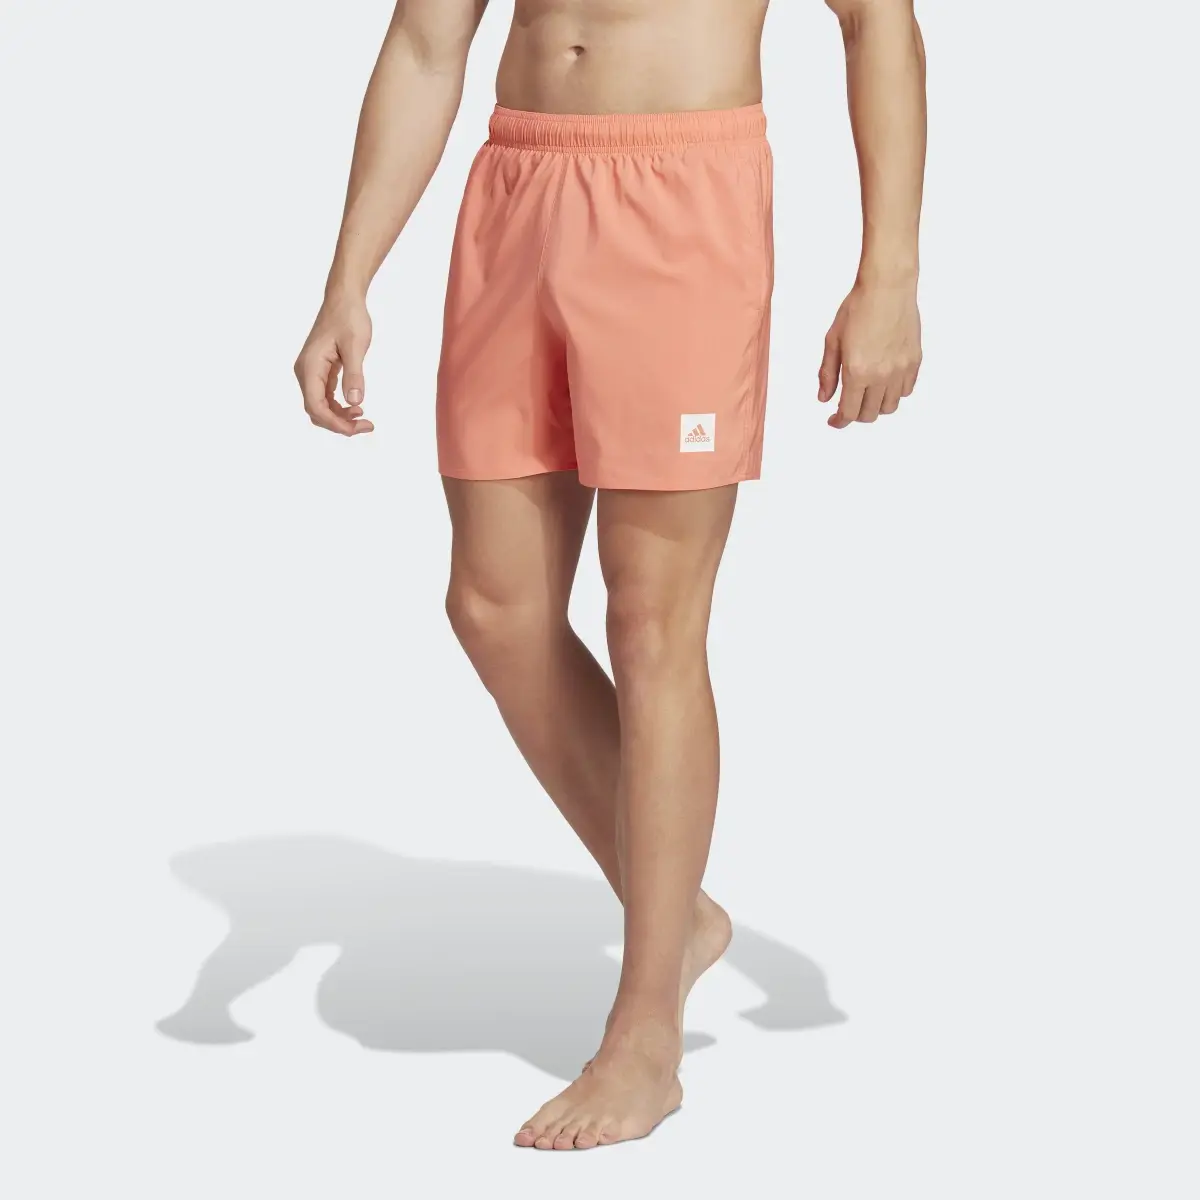 Adidas Short Length Solid Swim Shorts. 1